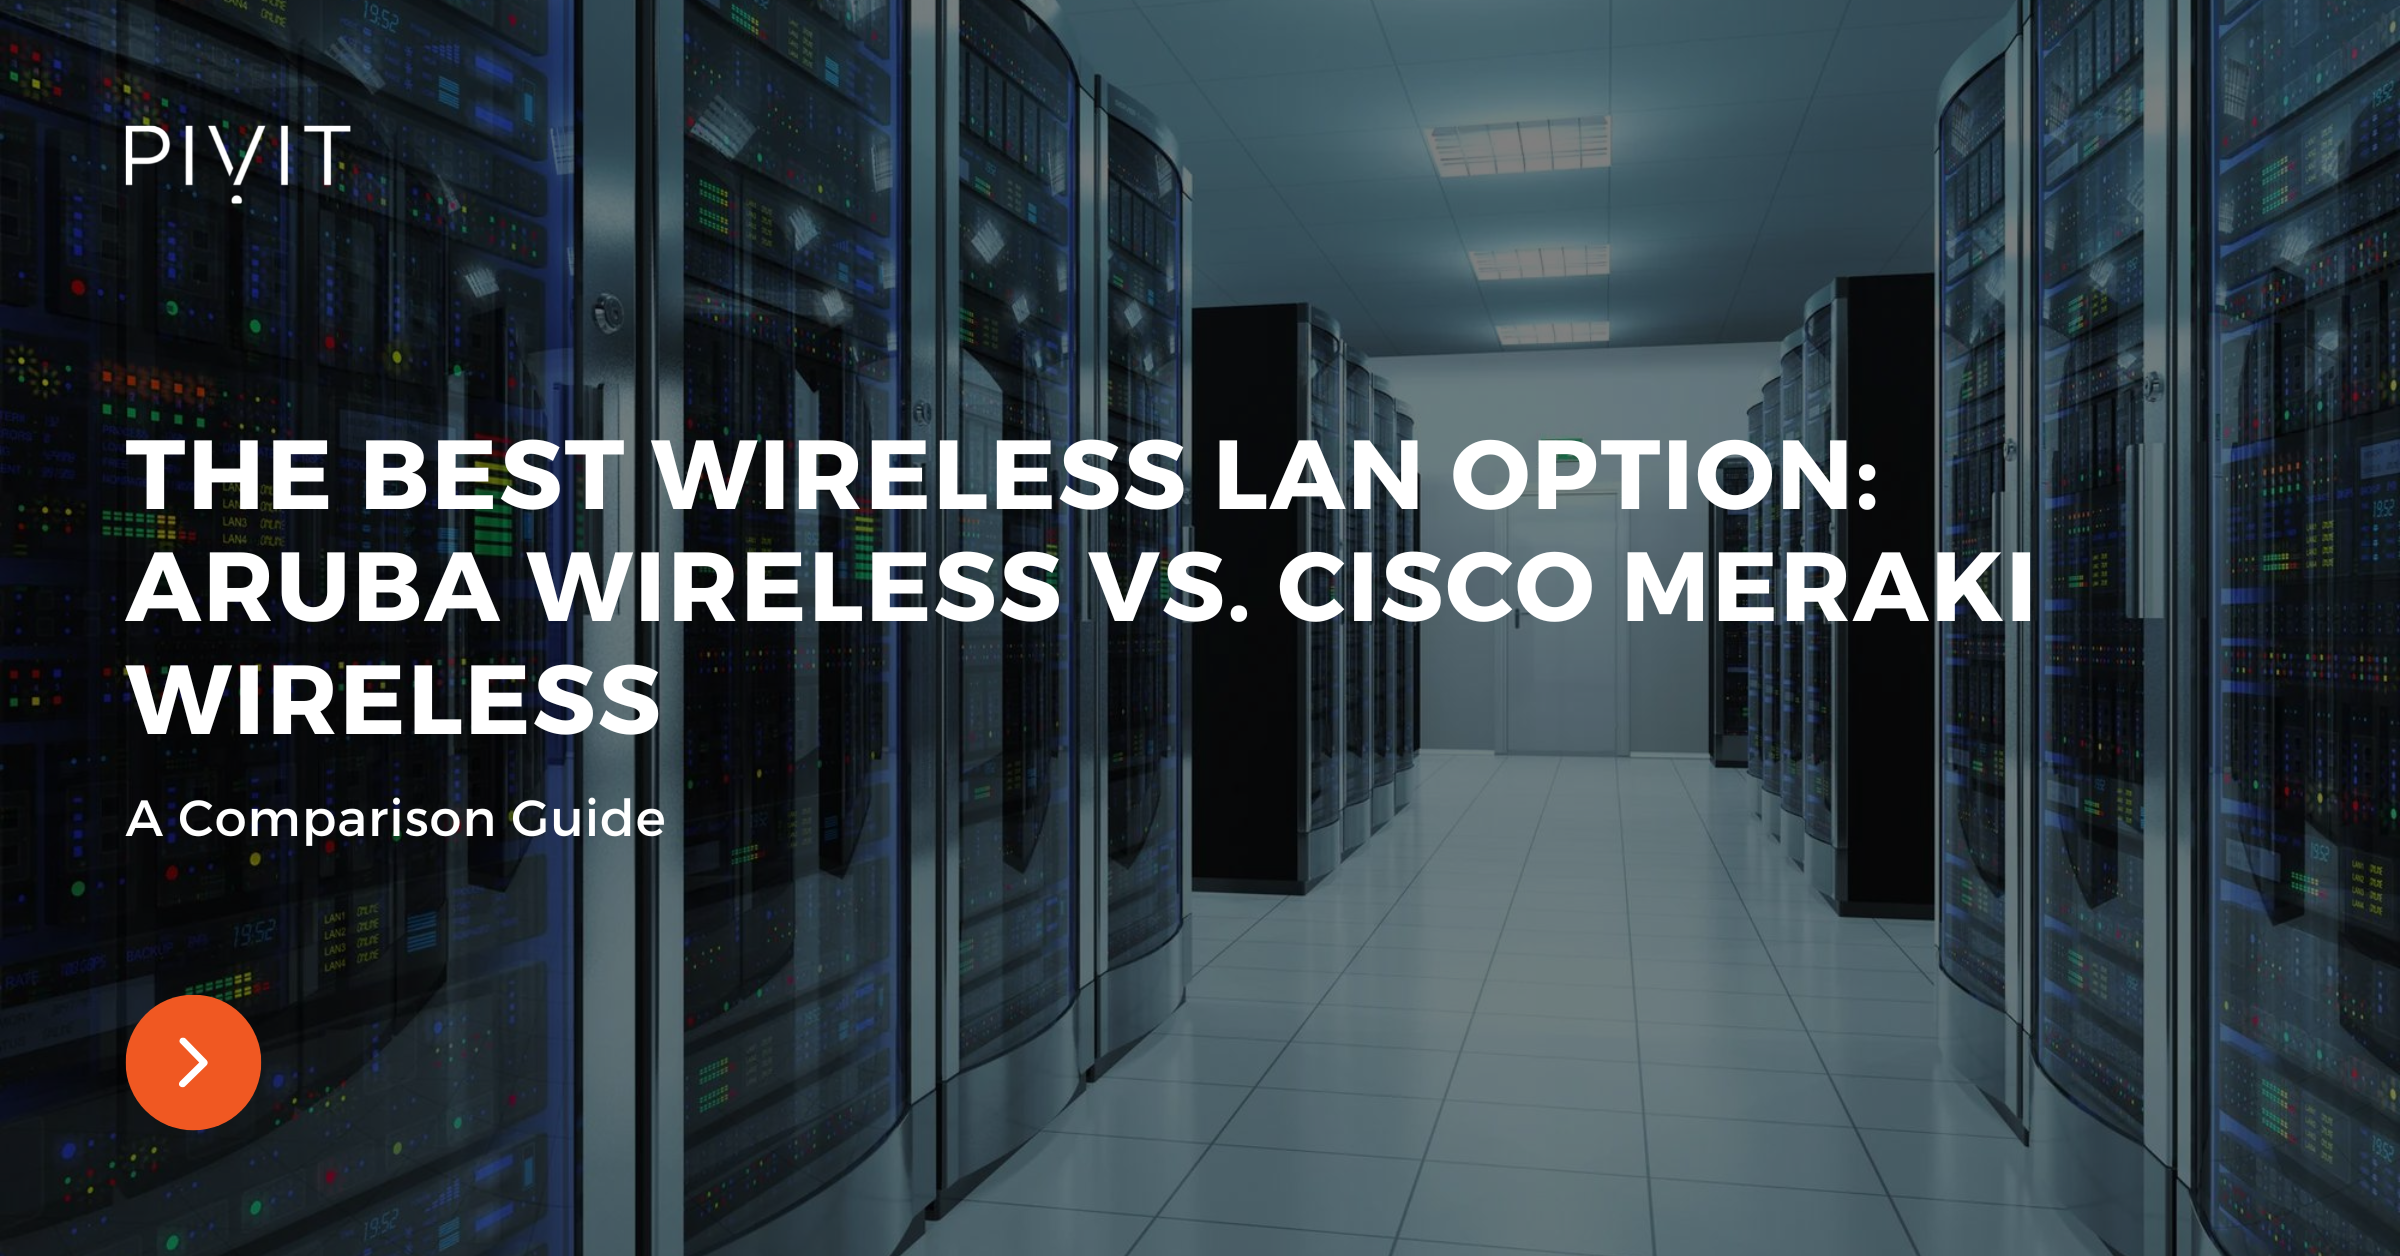 The Best Wireless LAN Option: Aruba Wireless vs. Cisco Meraki Wireless